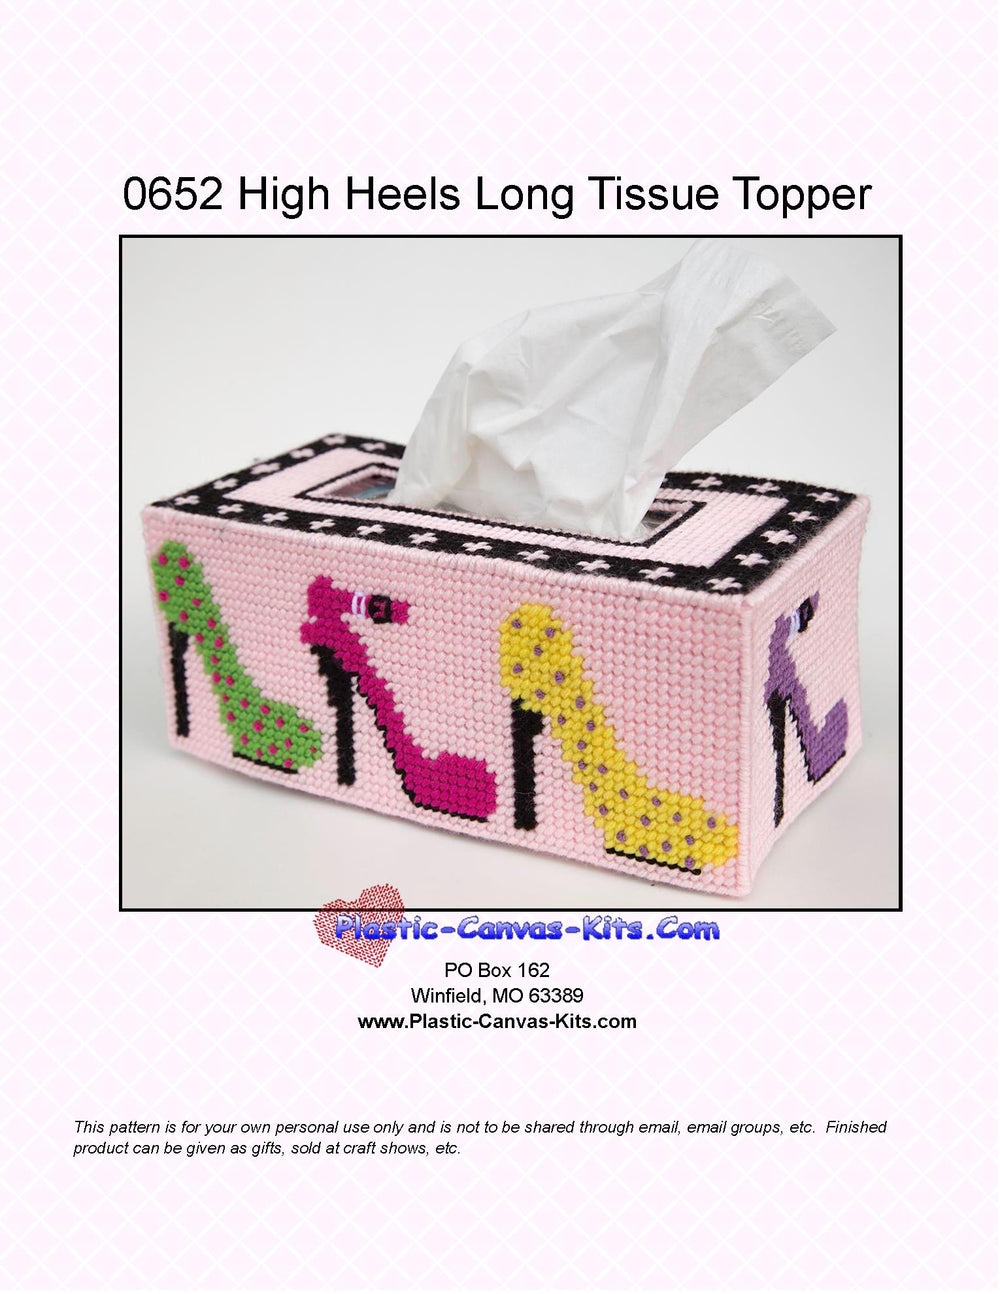 Fancy Shoes Long Tissue Topper